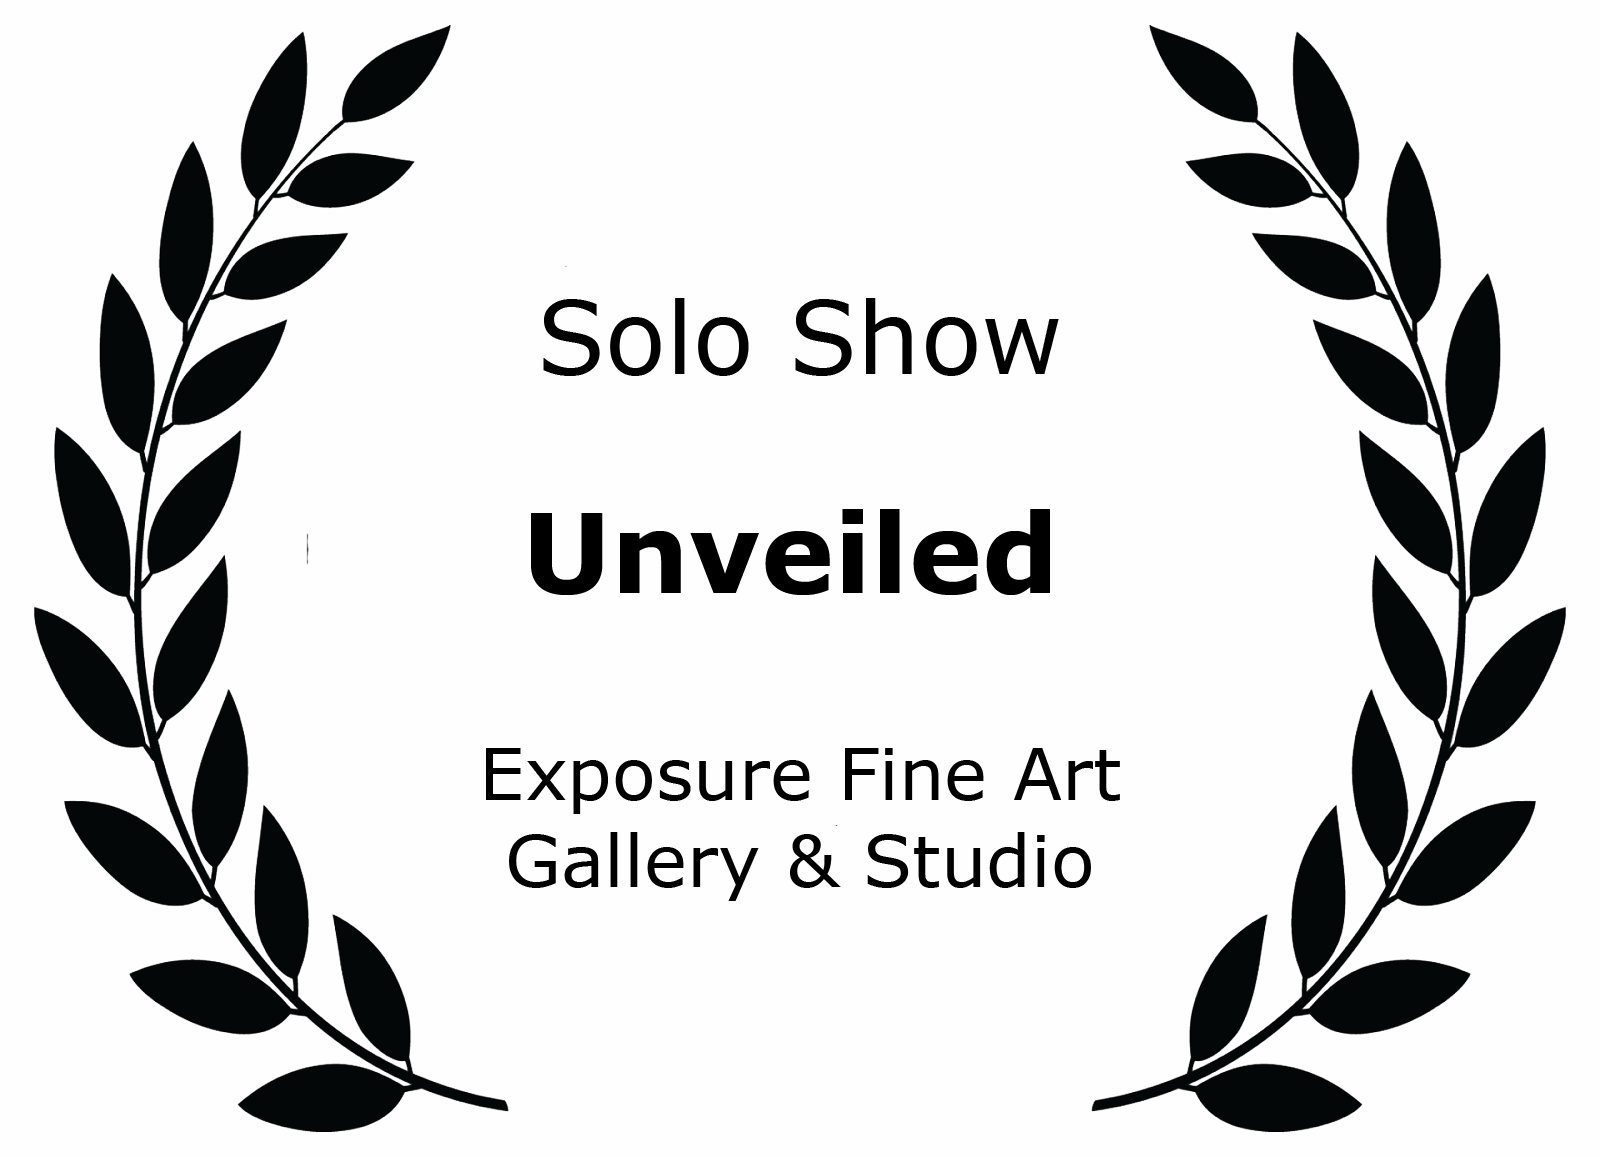 Solo Show Unveiled Exposure Fine Art Gallery & Studio